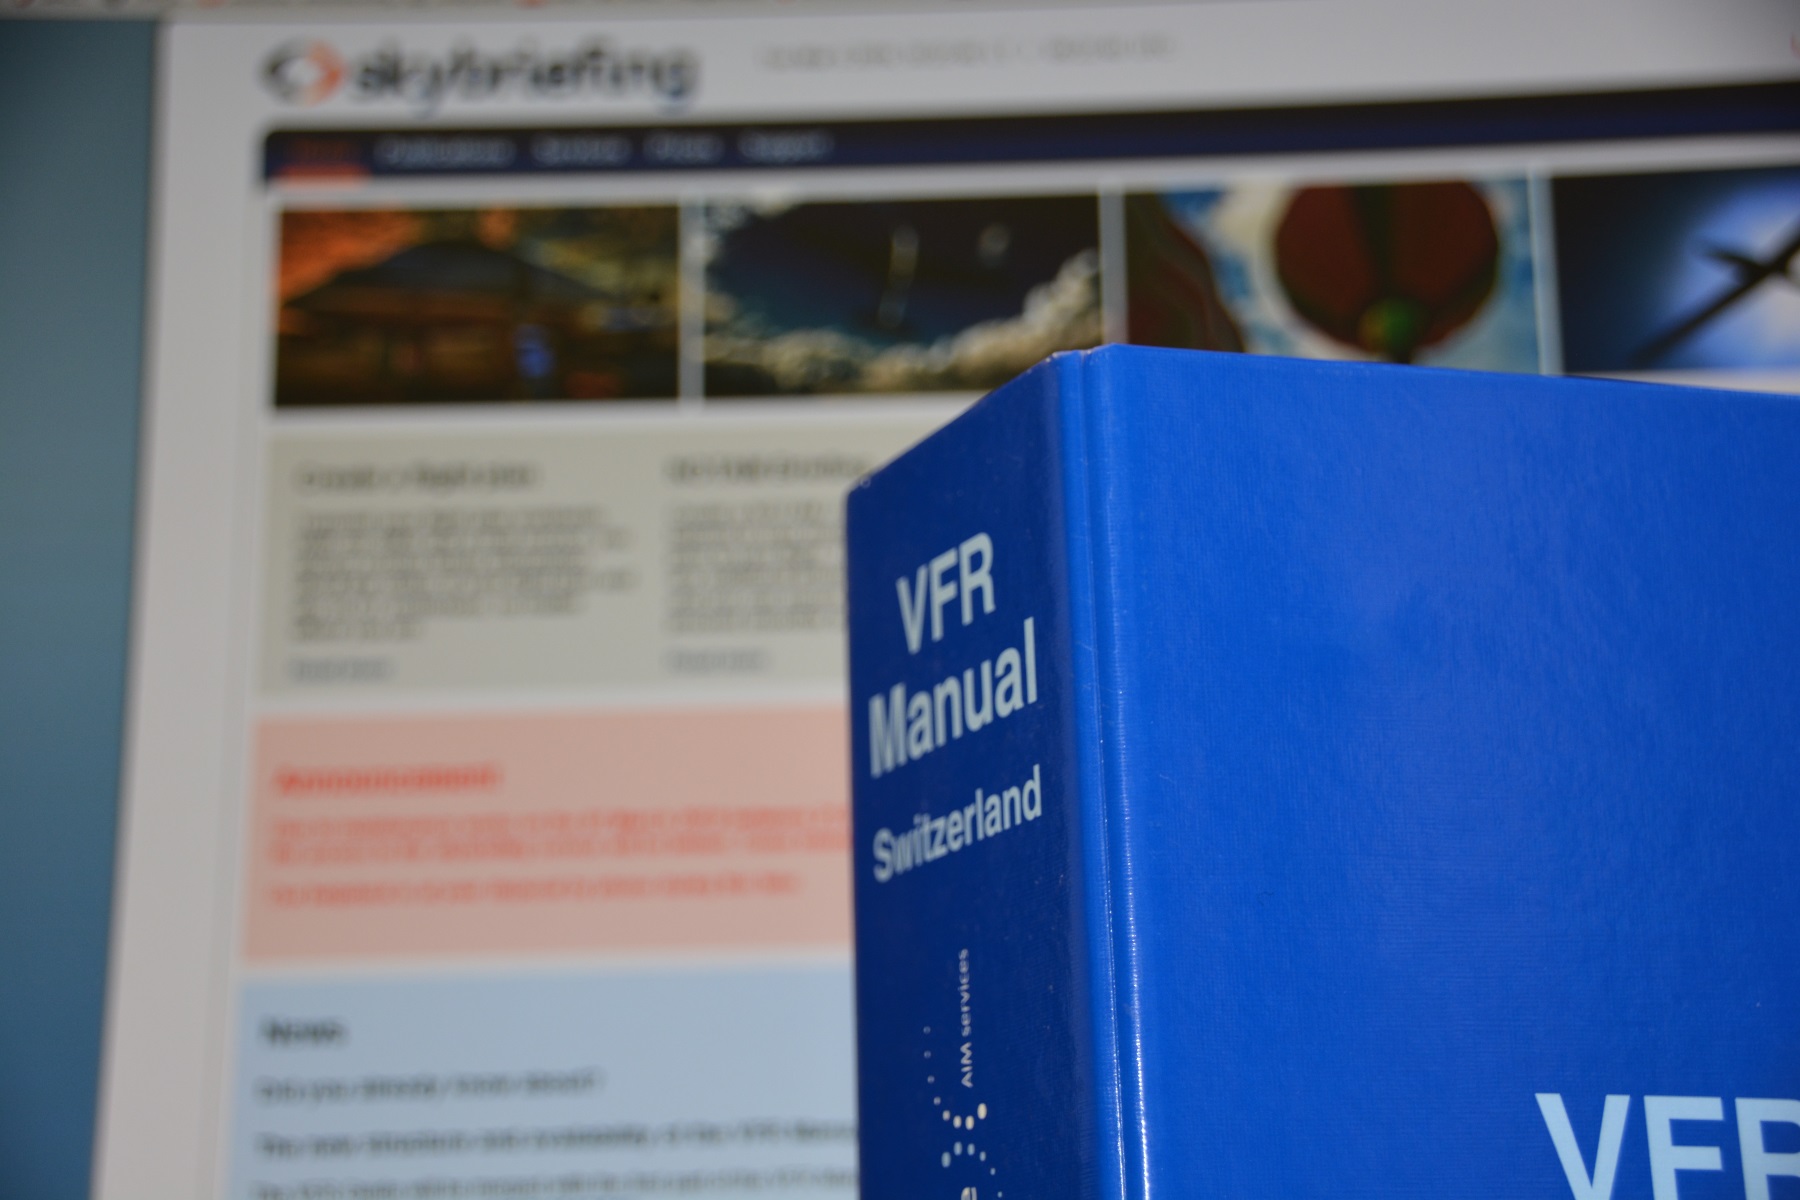 Intégration du recueil VFR dans le VFR Manual